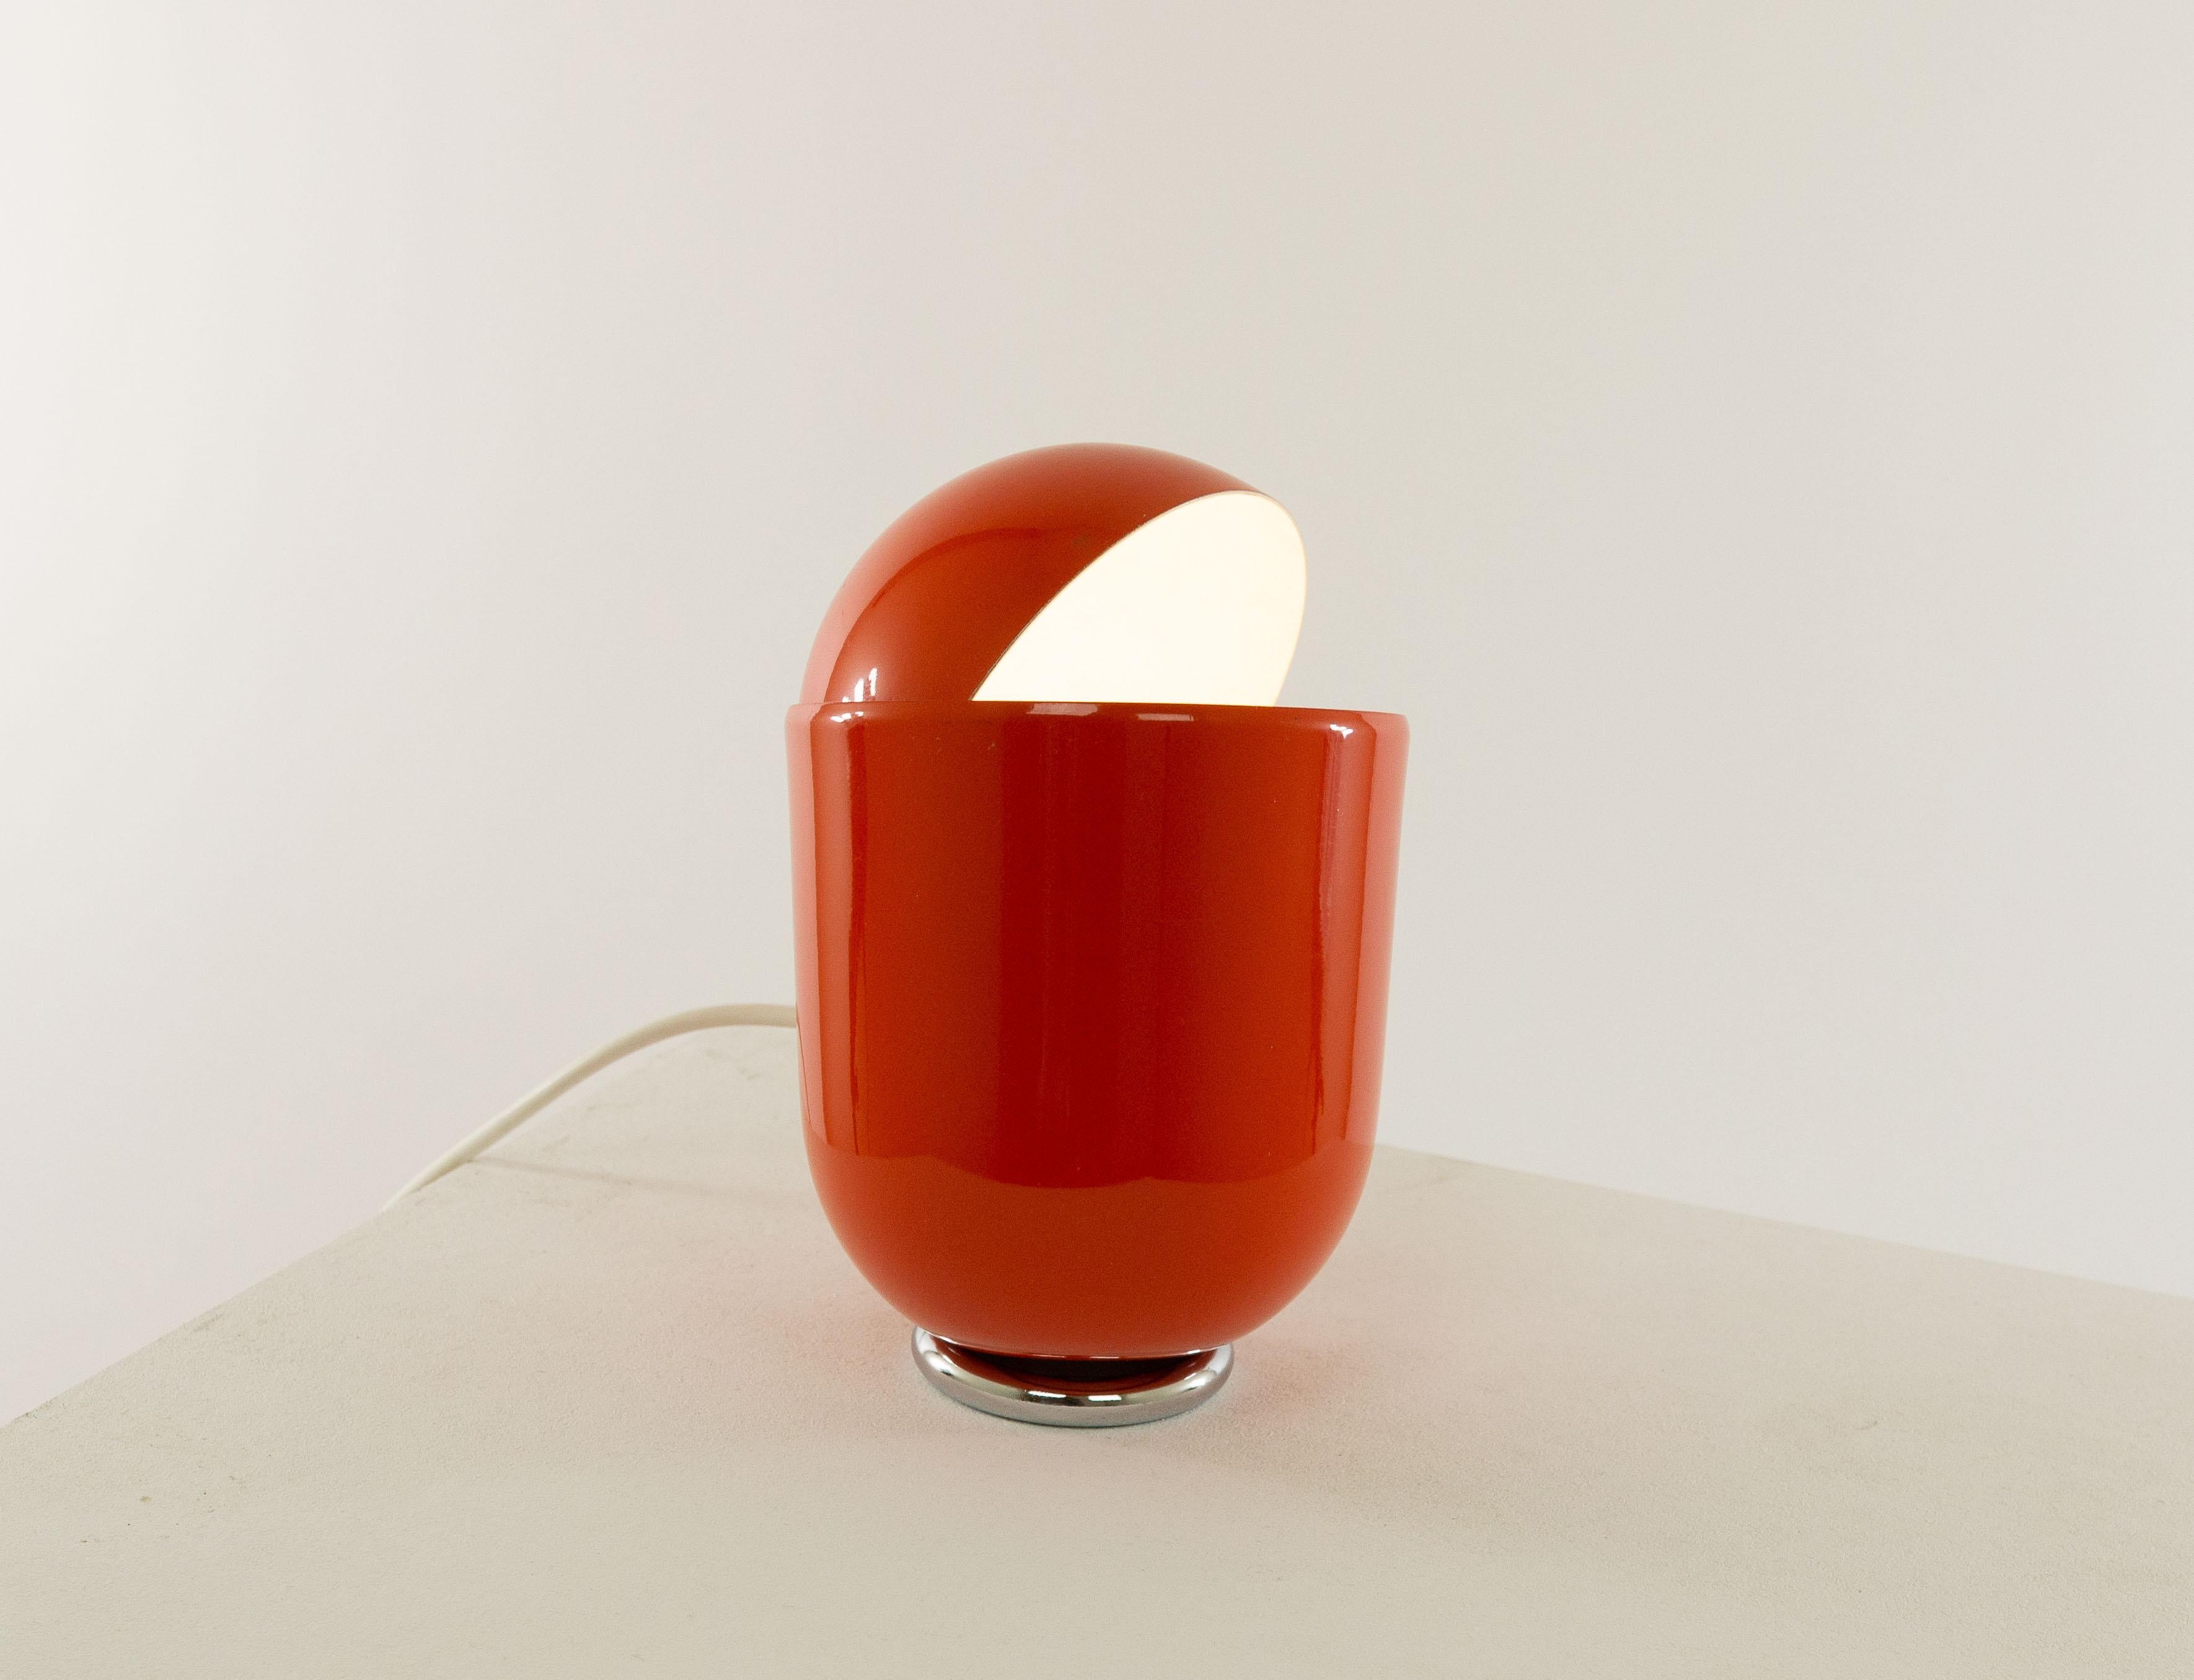 Space Age Orange Elmo Table Lamp by Str Imago DP, 1971